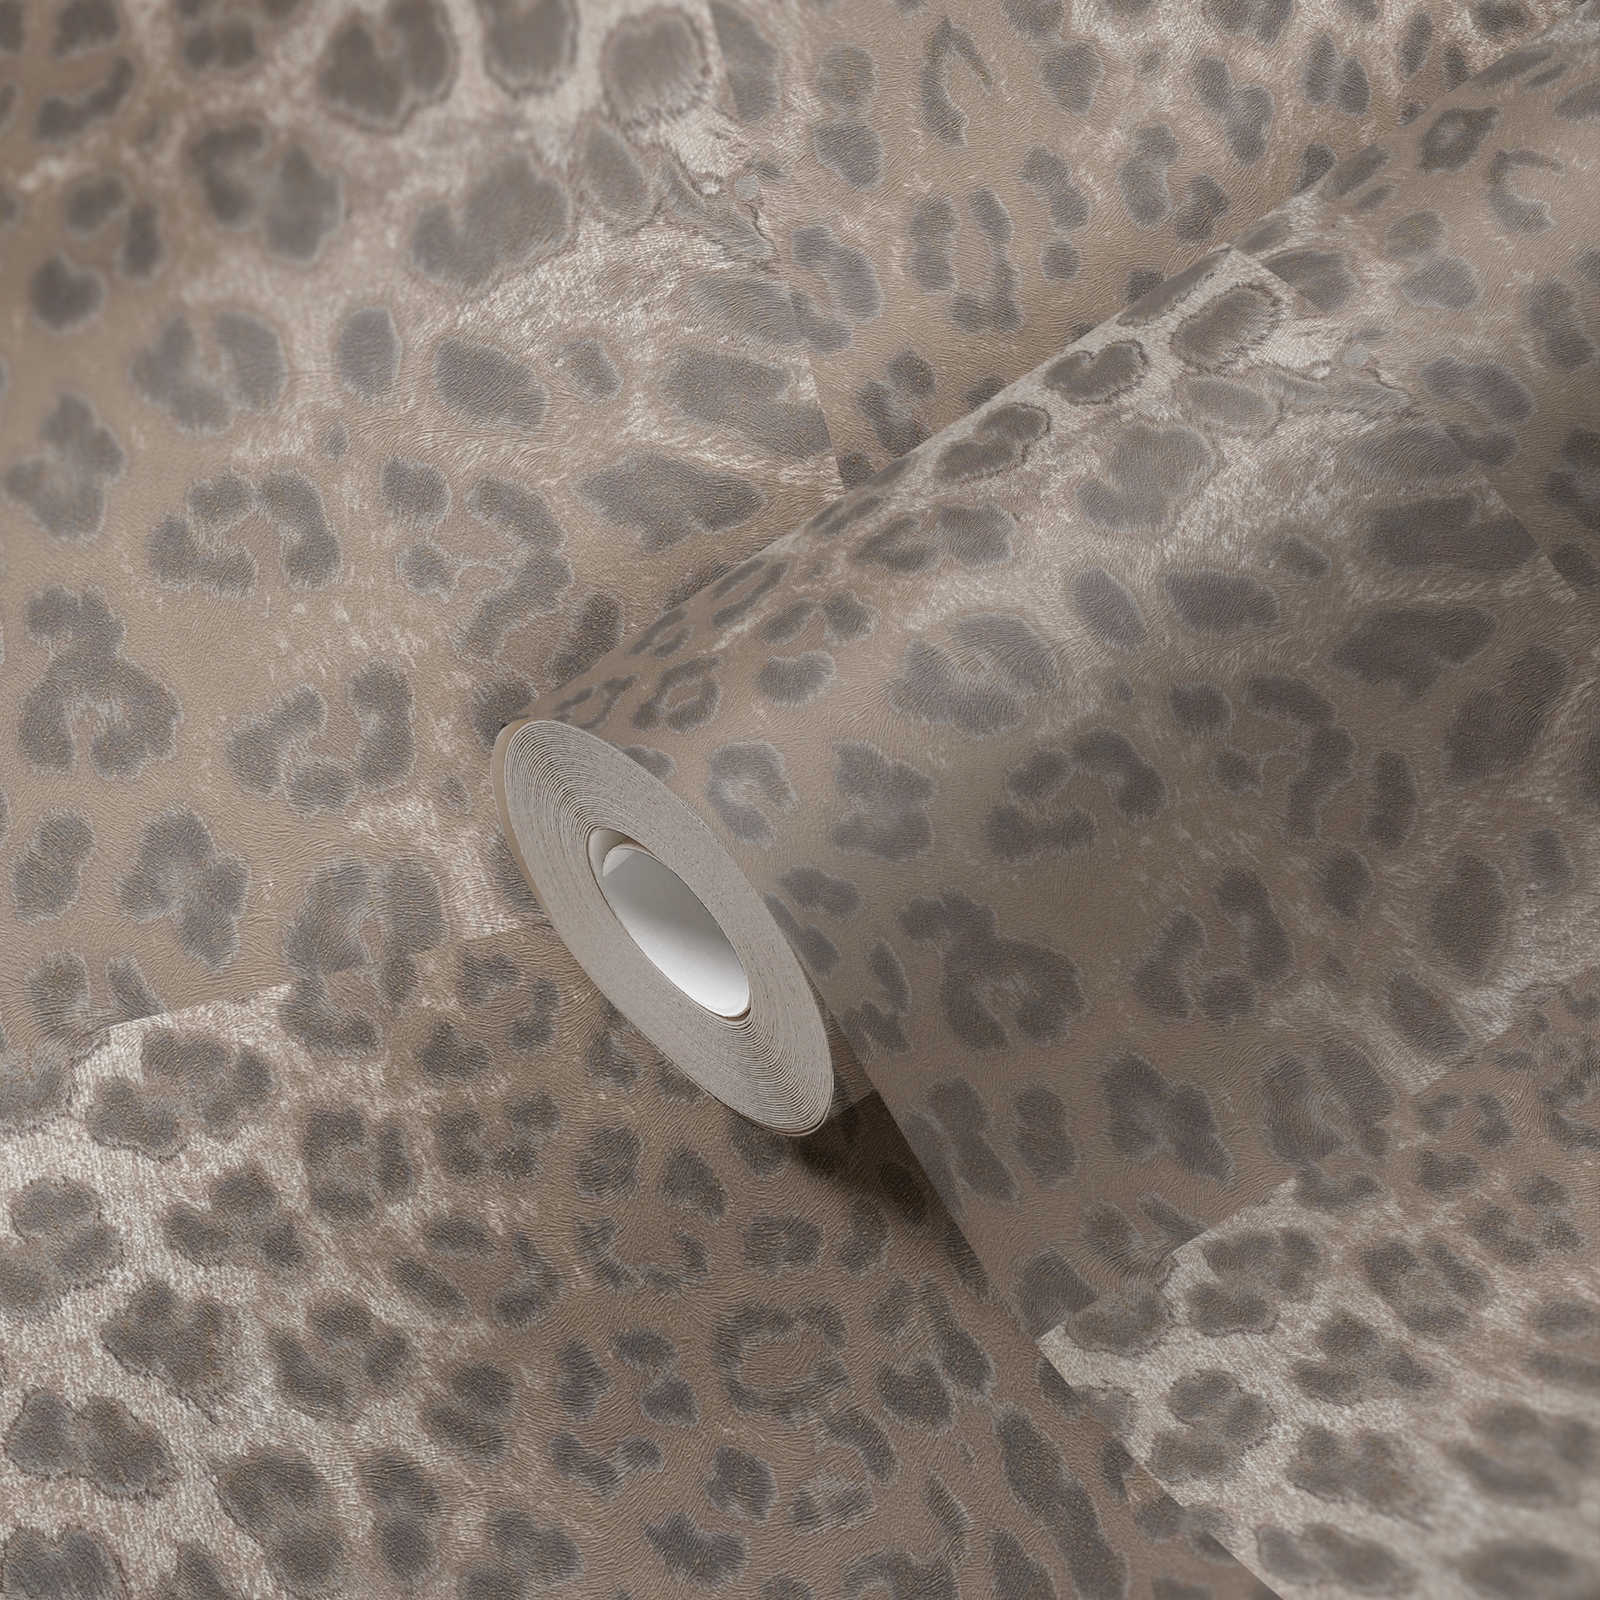             Tapete Animal Print Leopardenmuster – Beige, Metallic
        